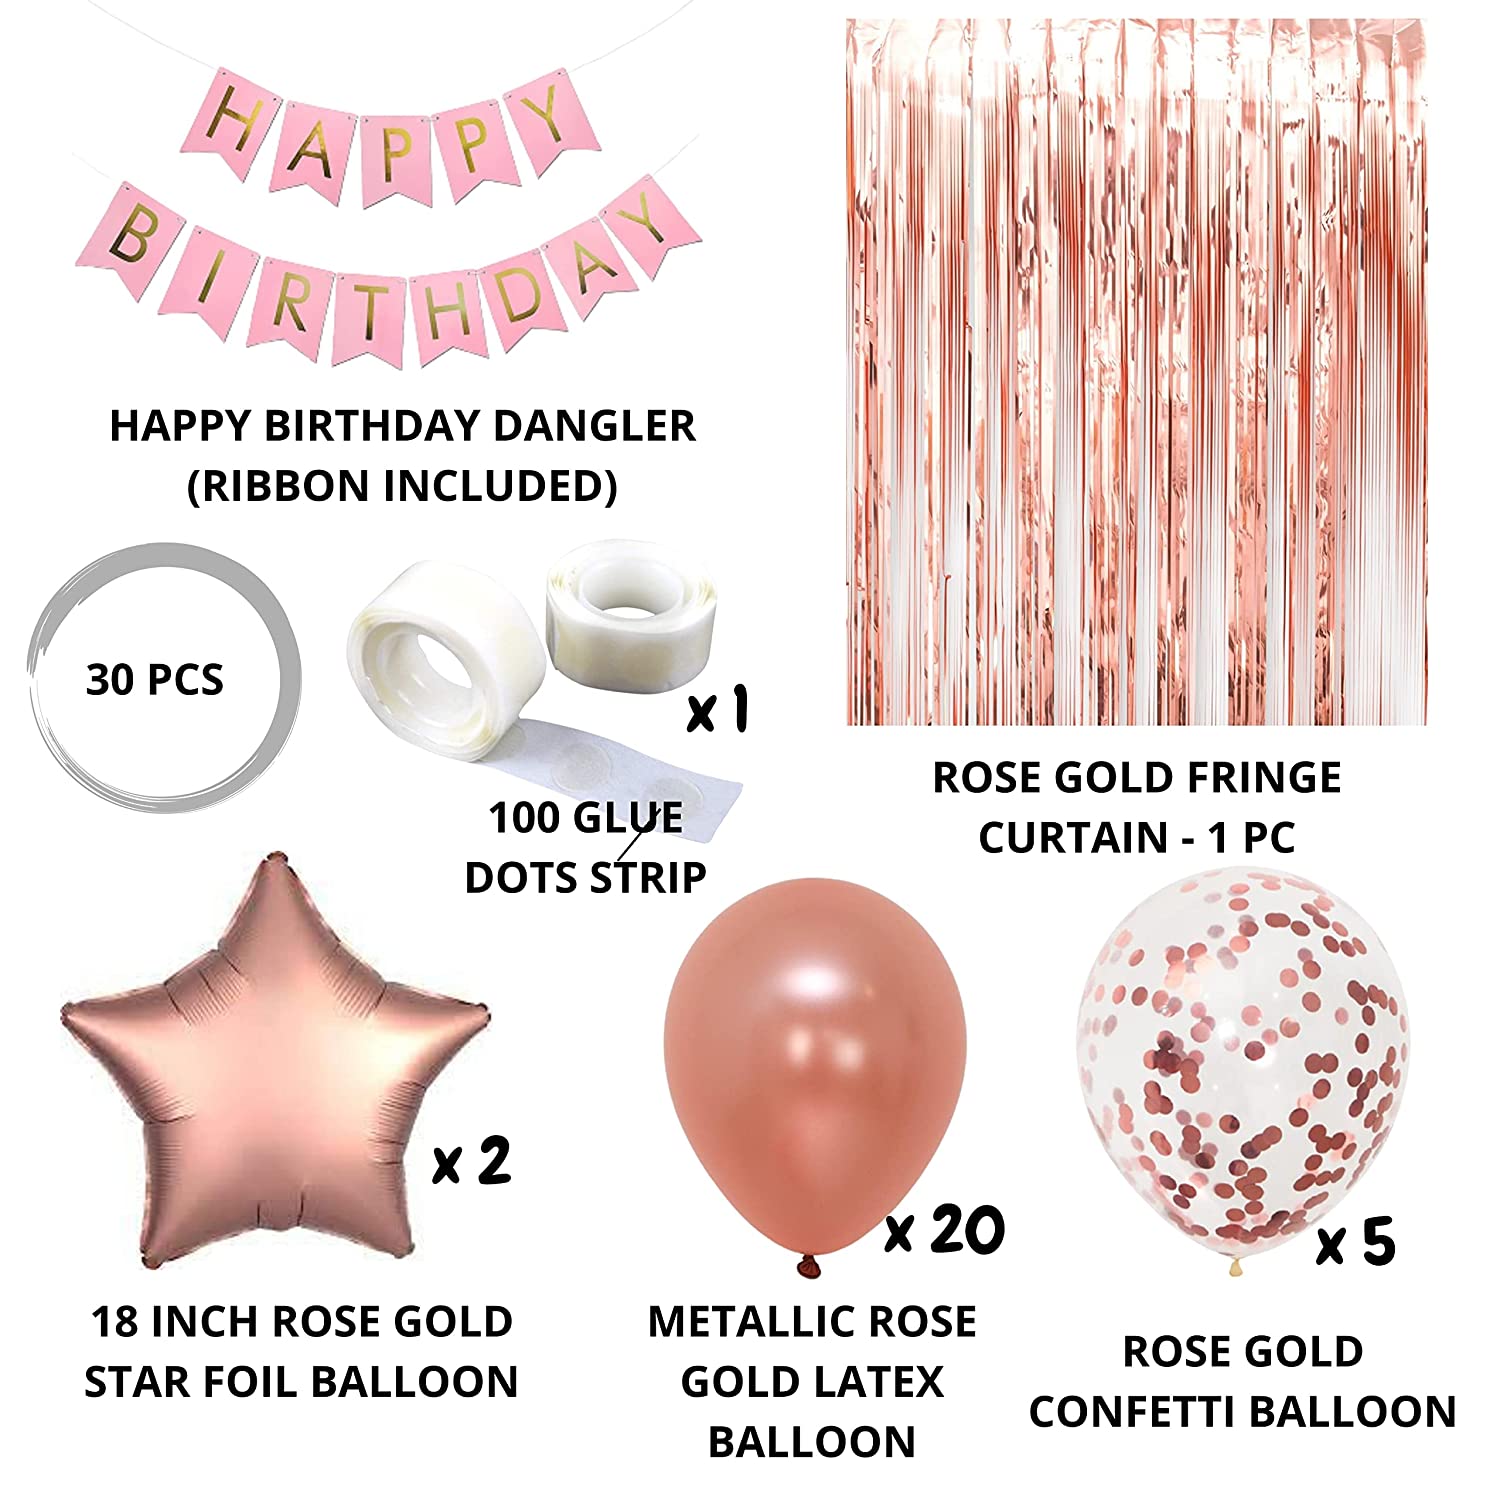 RoseGold Metallic Balloon, RoseGold Confetti, RoseGold Star Foil Balloon, RoseGold Fringe Foil curtain & Pink Happy Birthday Banner(30 Pcs)